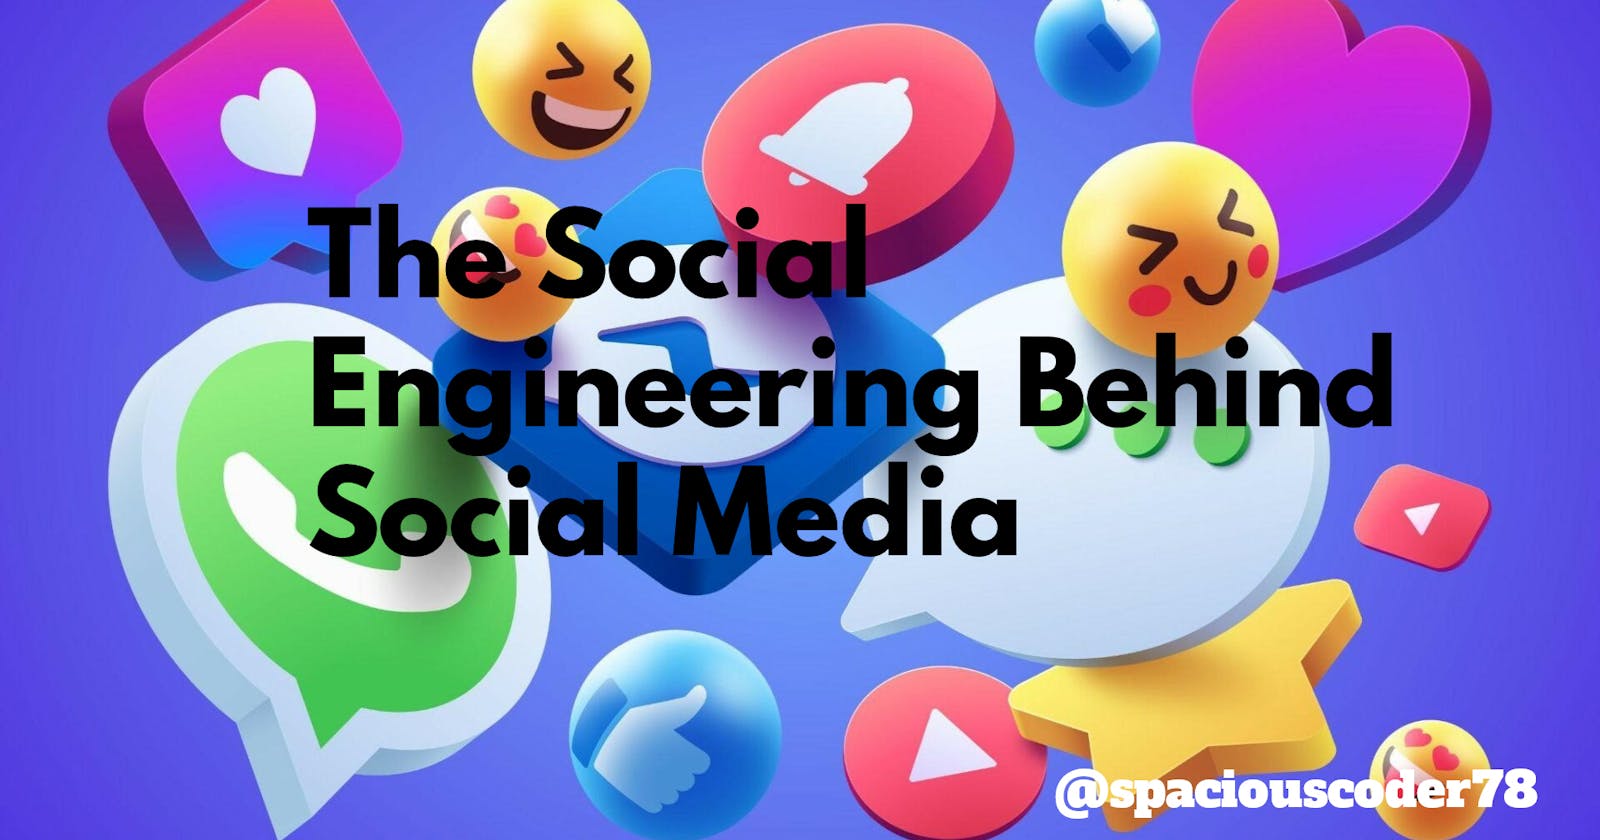 The Social Engineering Behind Social Media